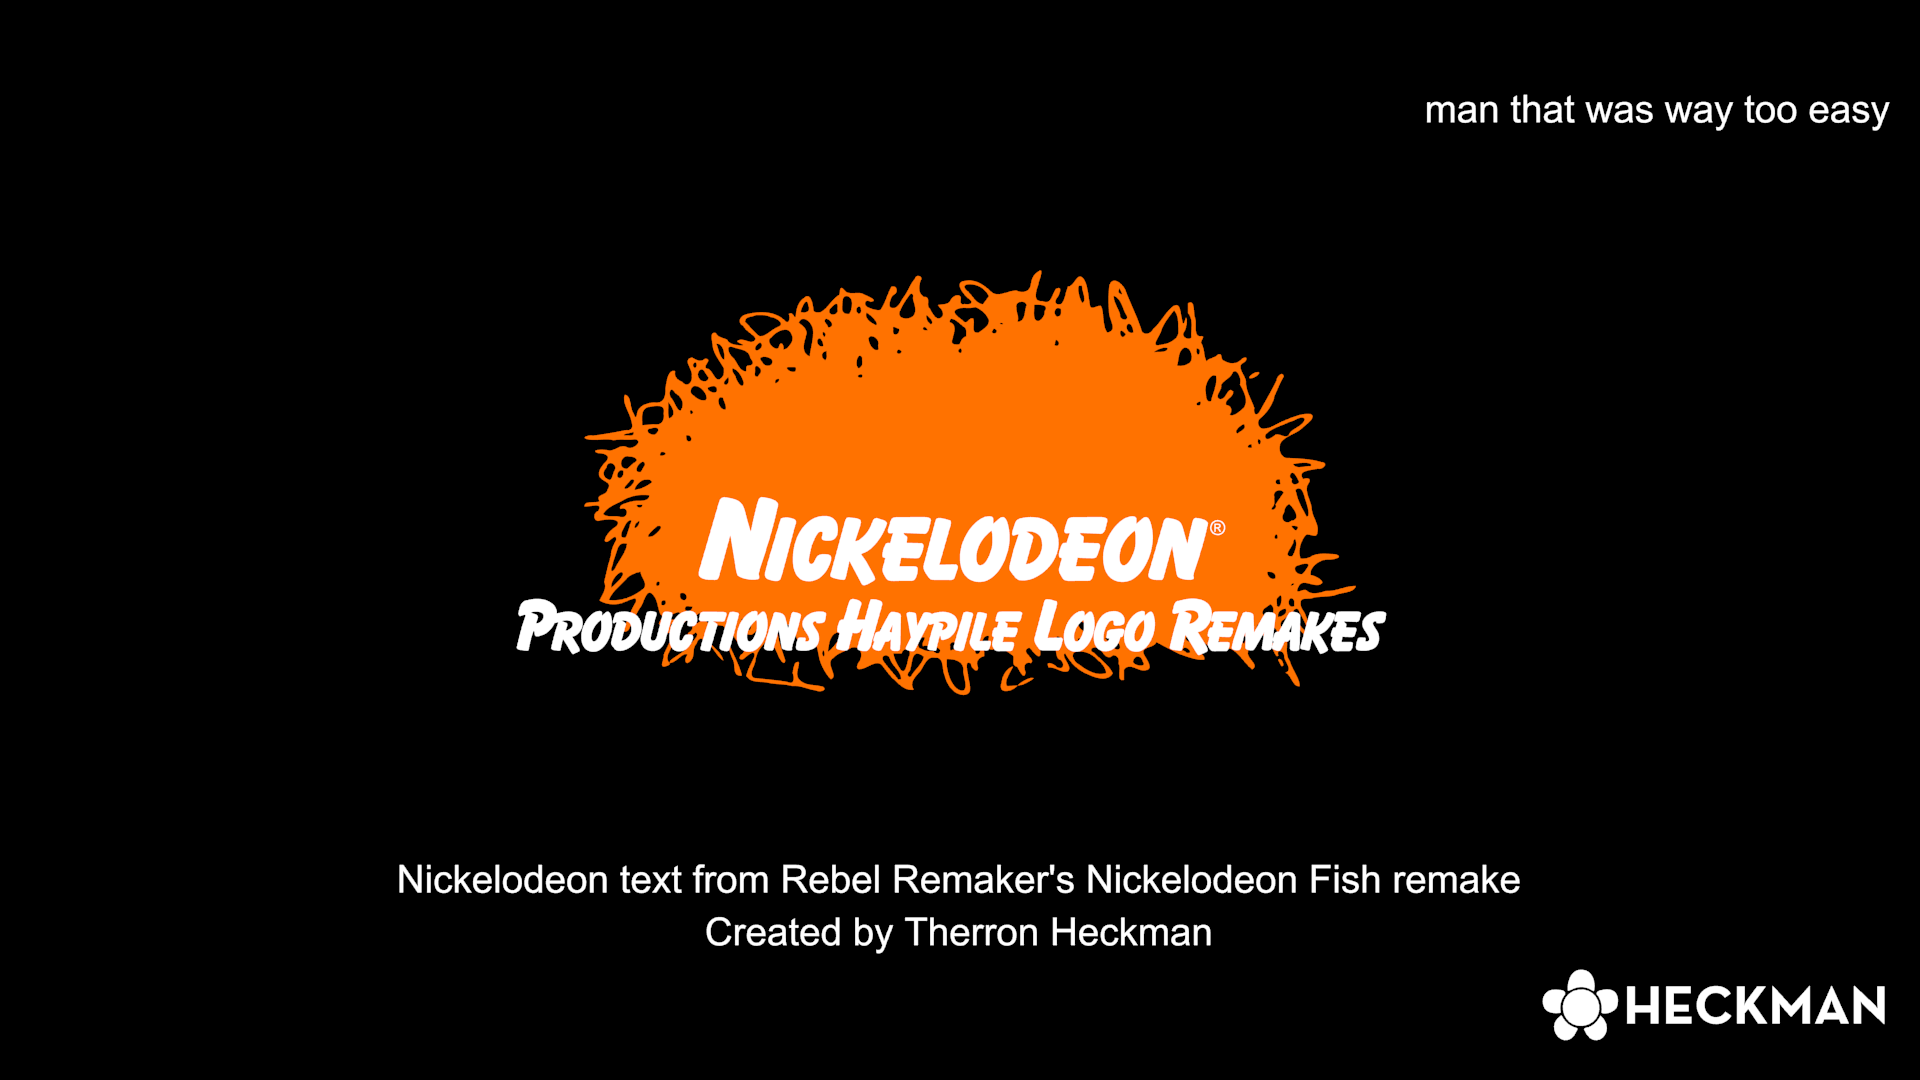 Nickelodeon Productions 1990 Haypile Remakes by babytherron on DeviantArt